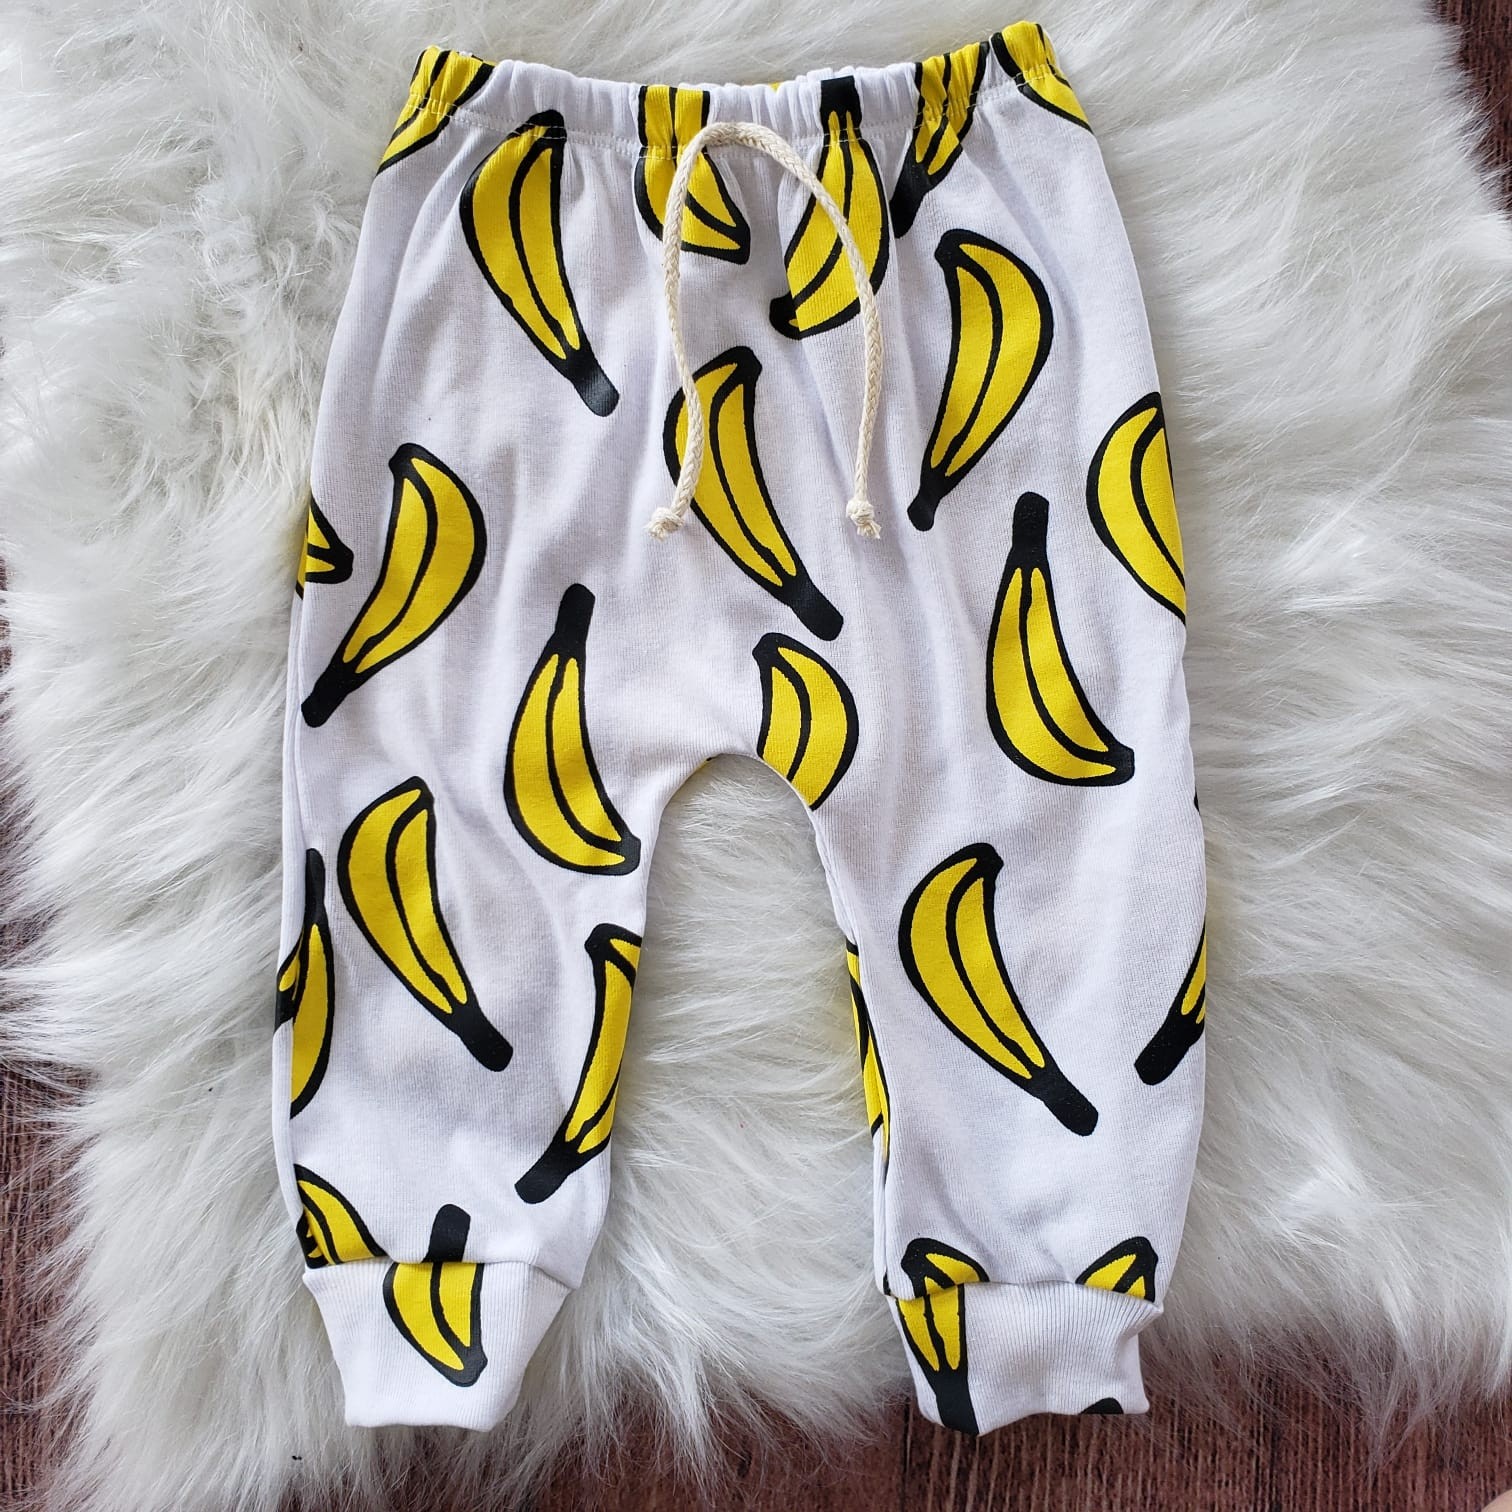 Saruel Branco Bananas